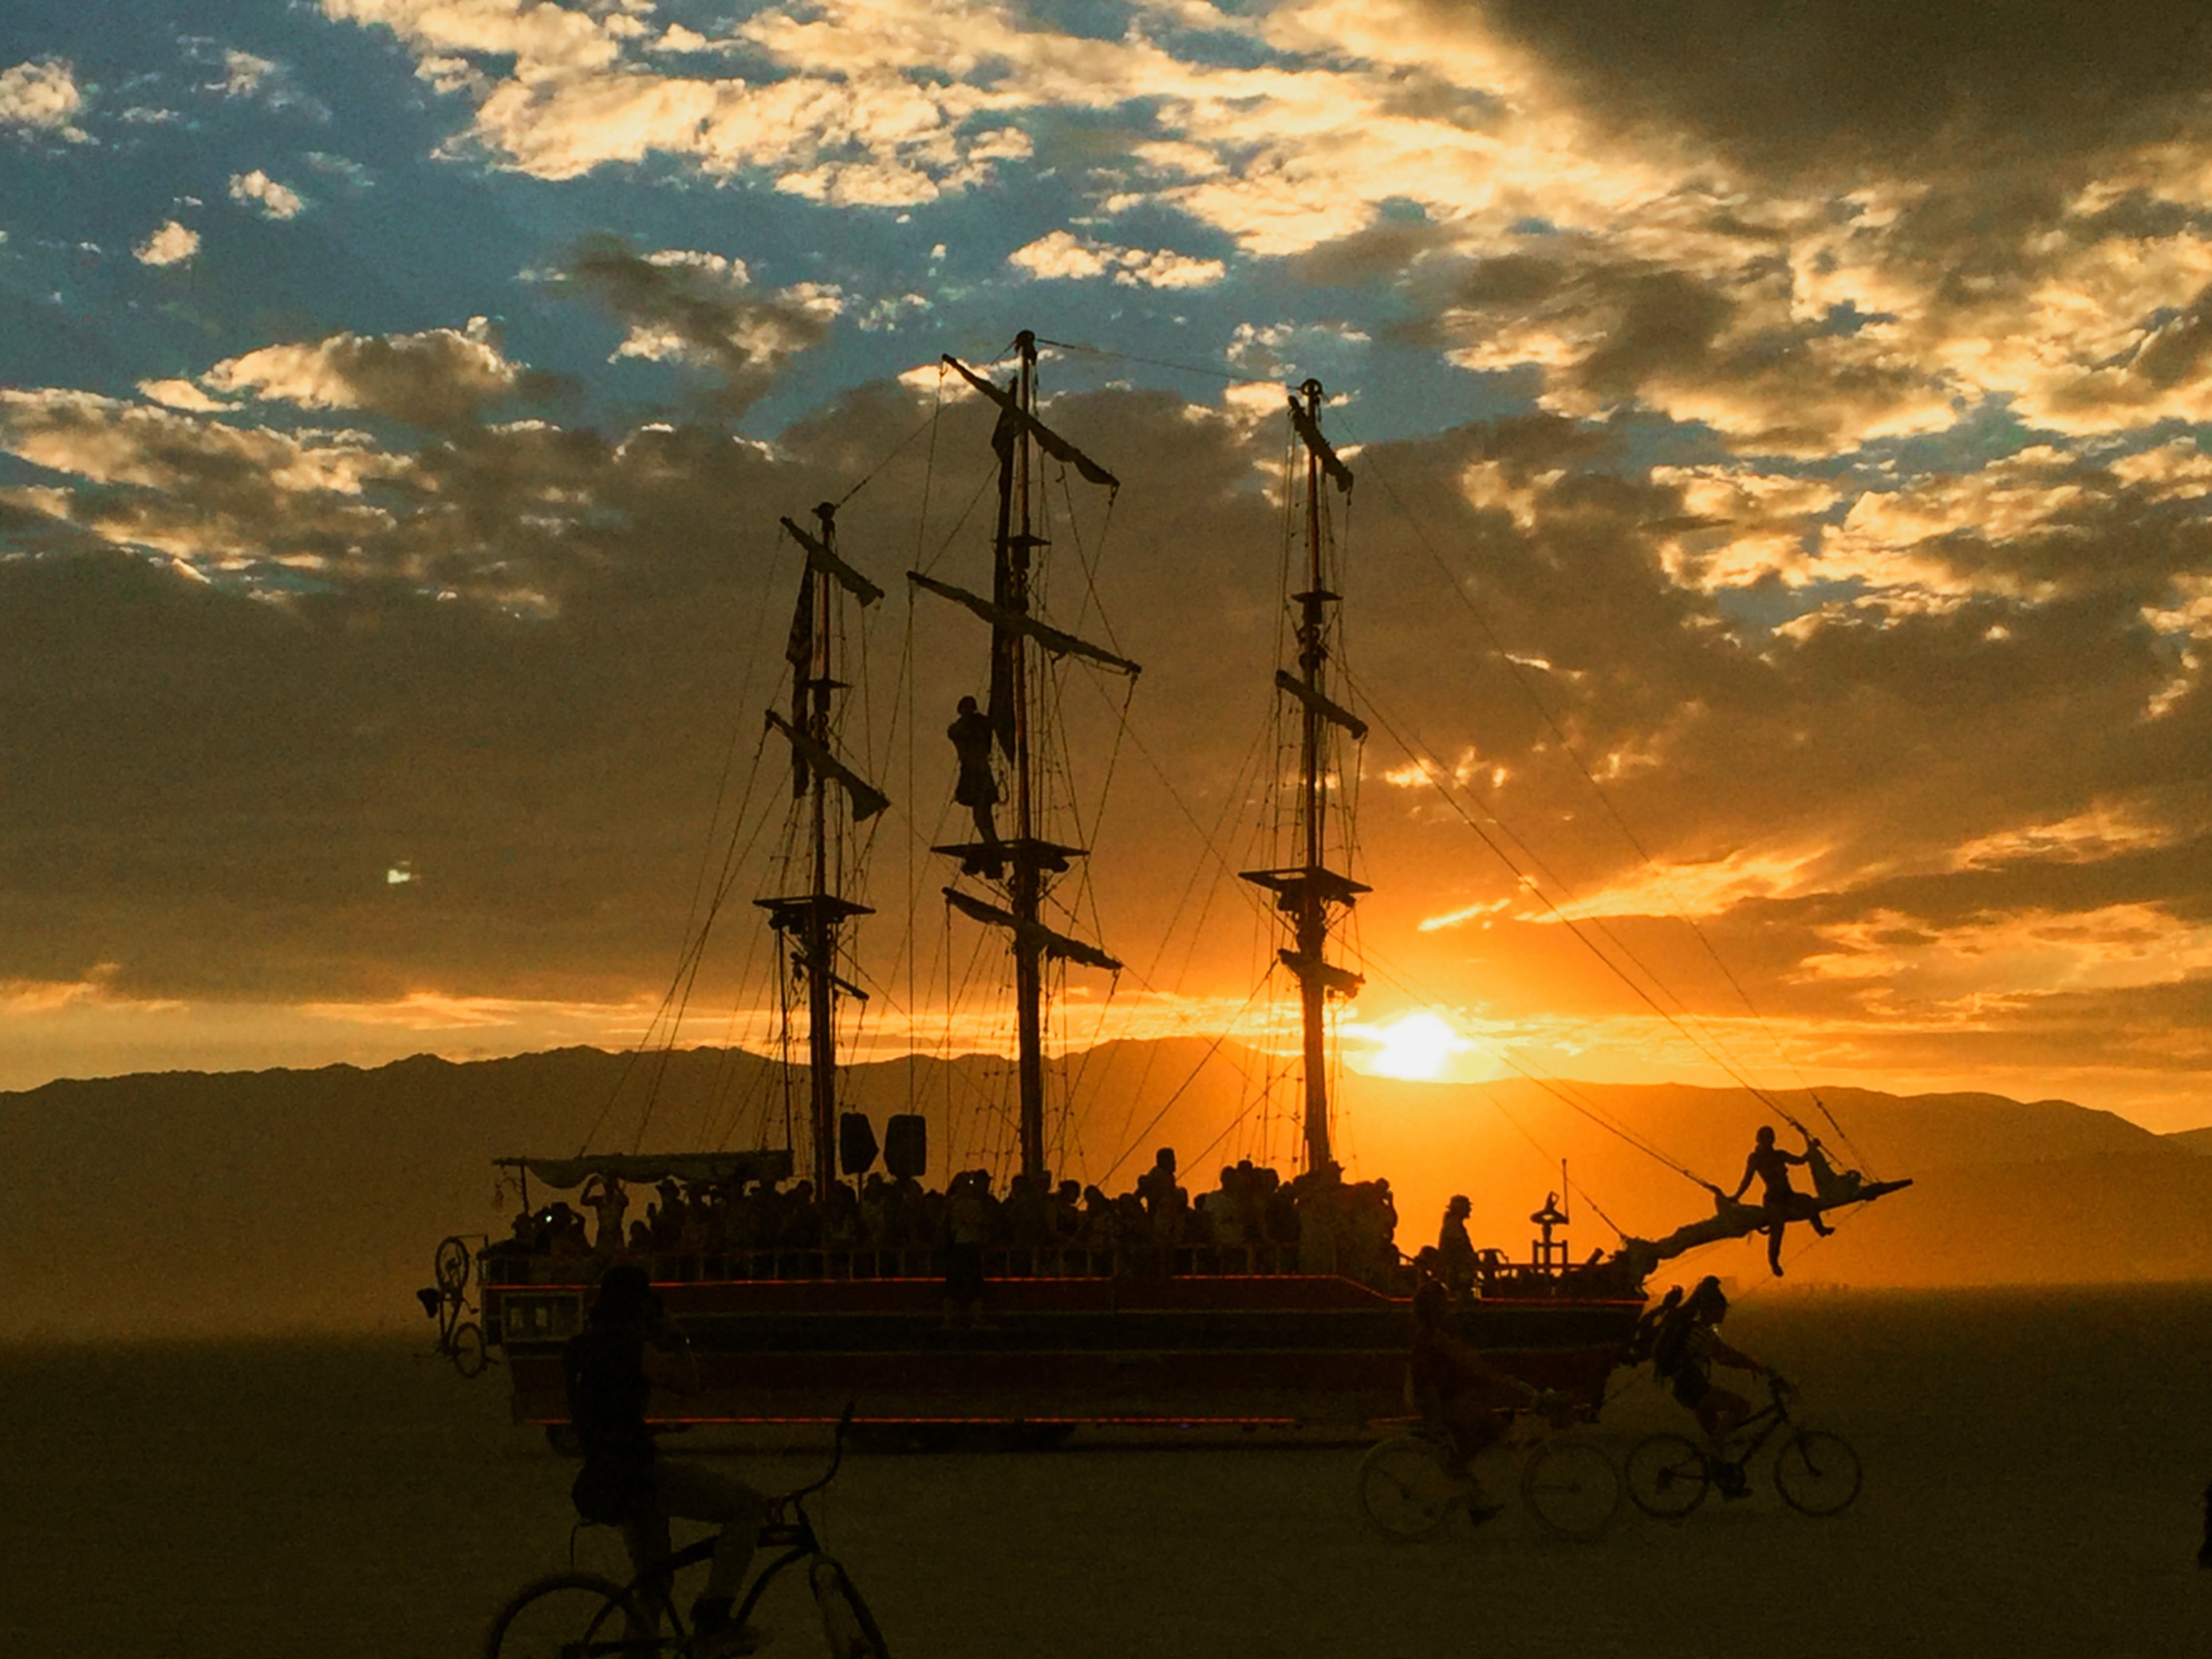 Pirate Ship on Playa at sunset